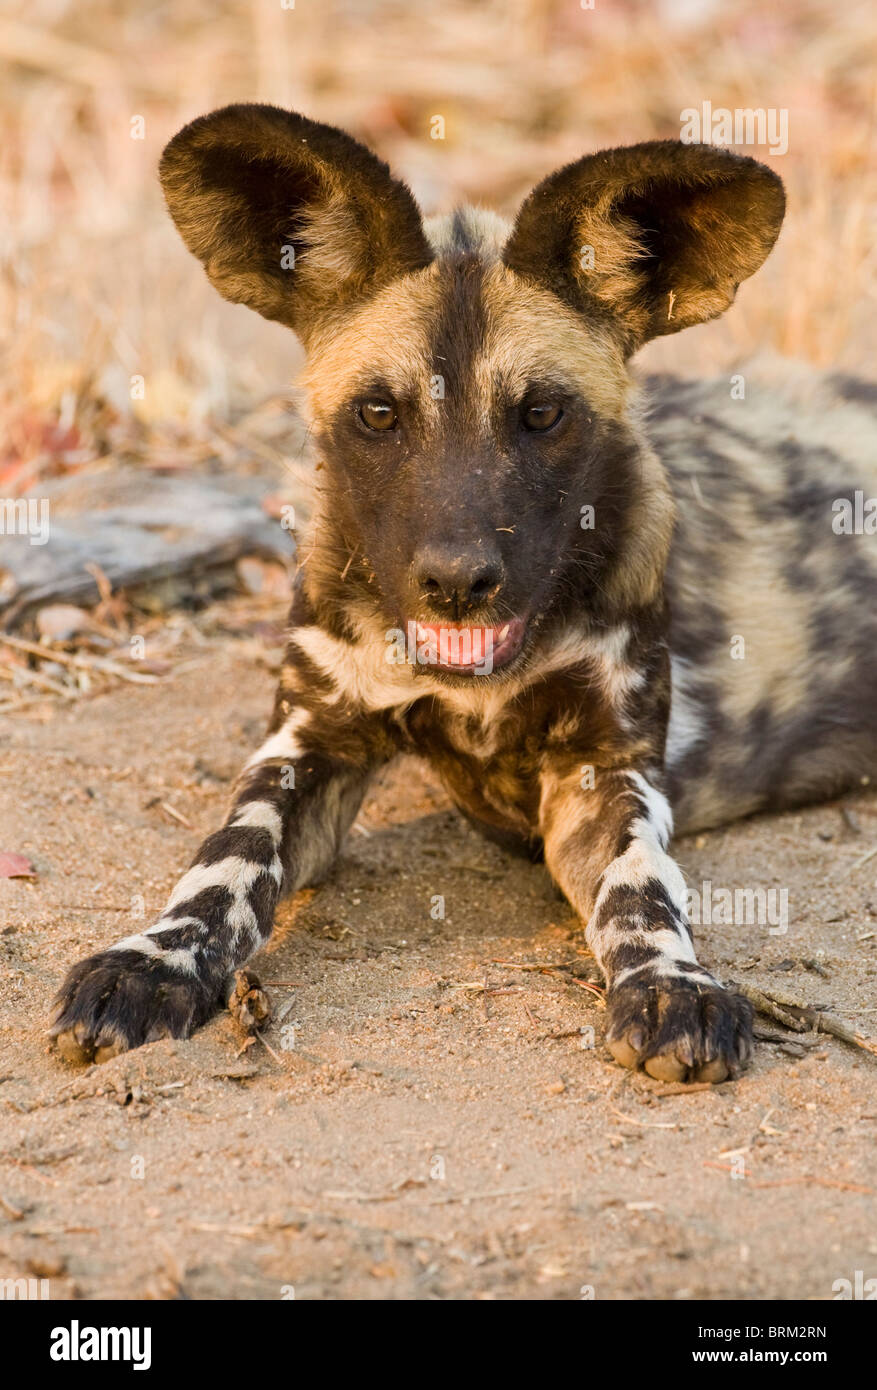 African Wild dog portrait Stock Photo